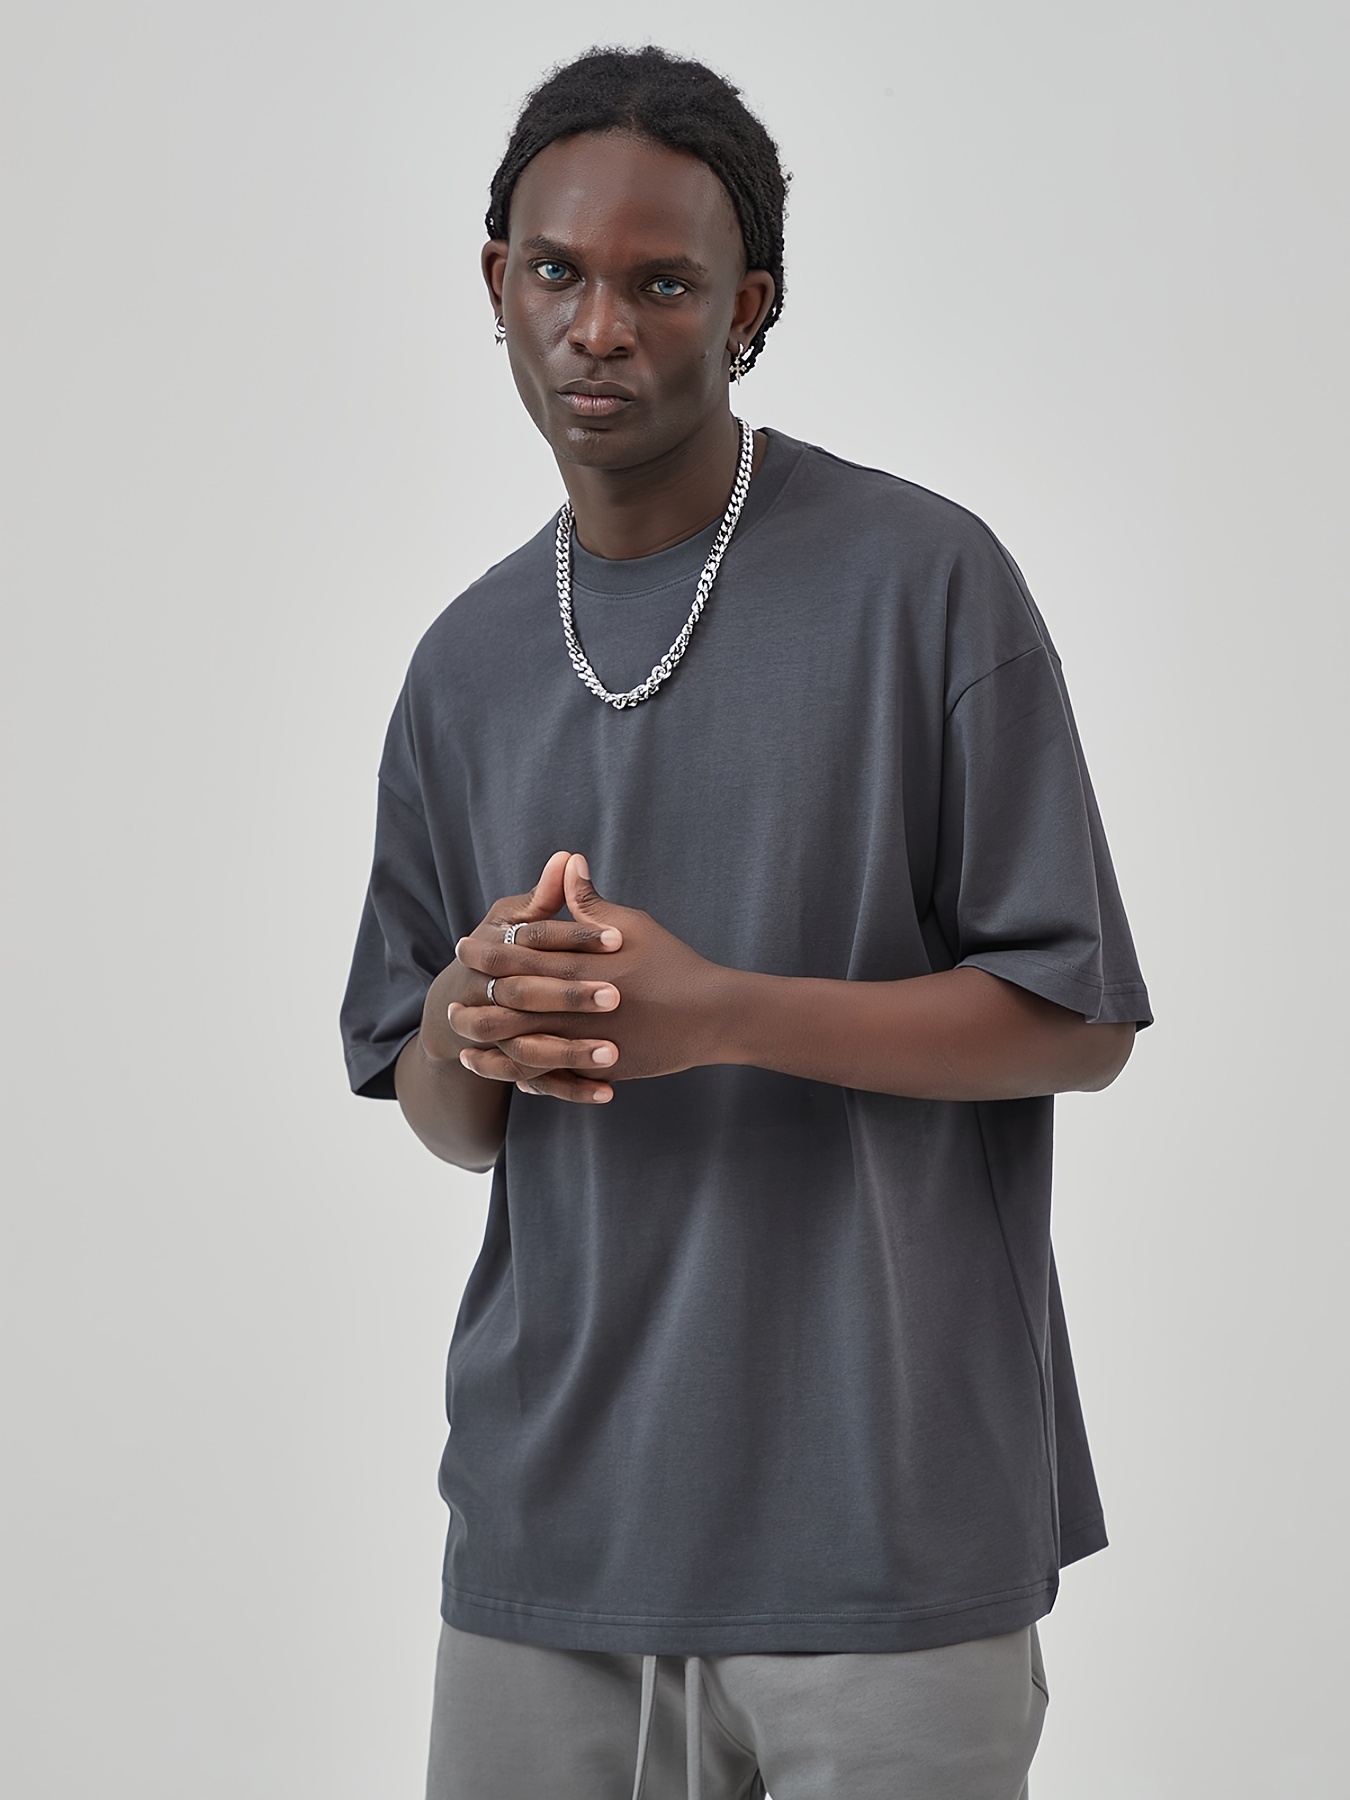 Fashion Short Sleeve Men's Loose Shirt Teen Solid Color Shirt-grey @ Best  Price Online